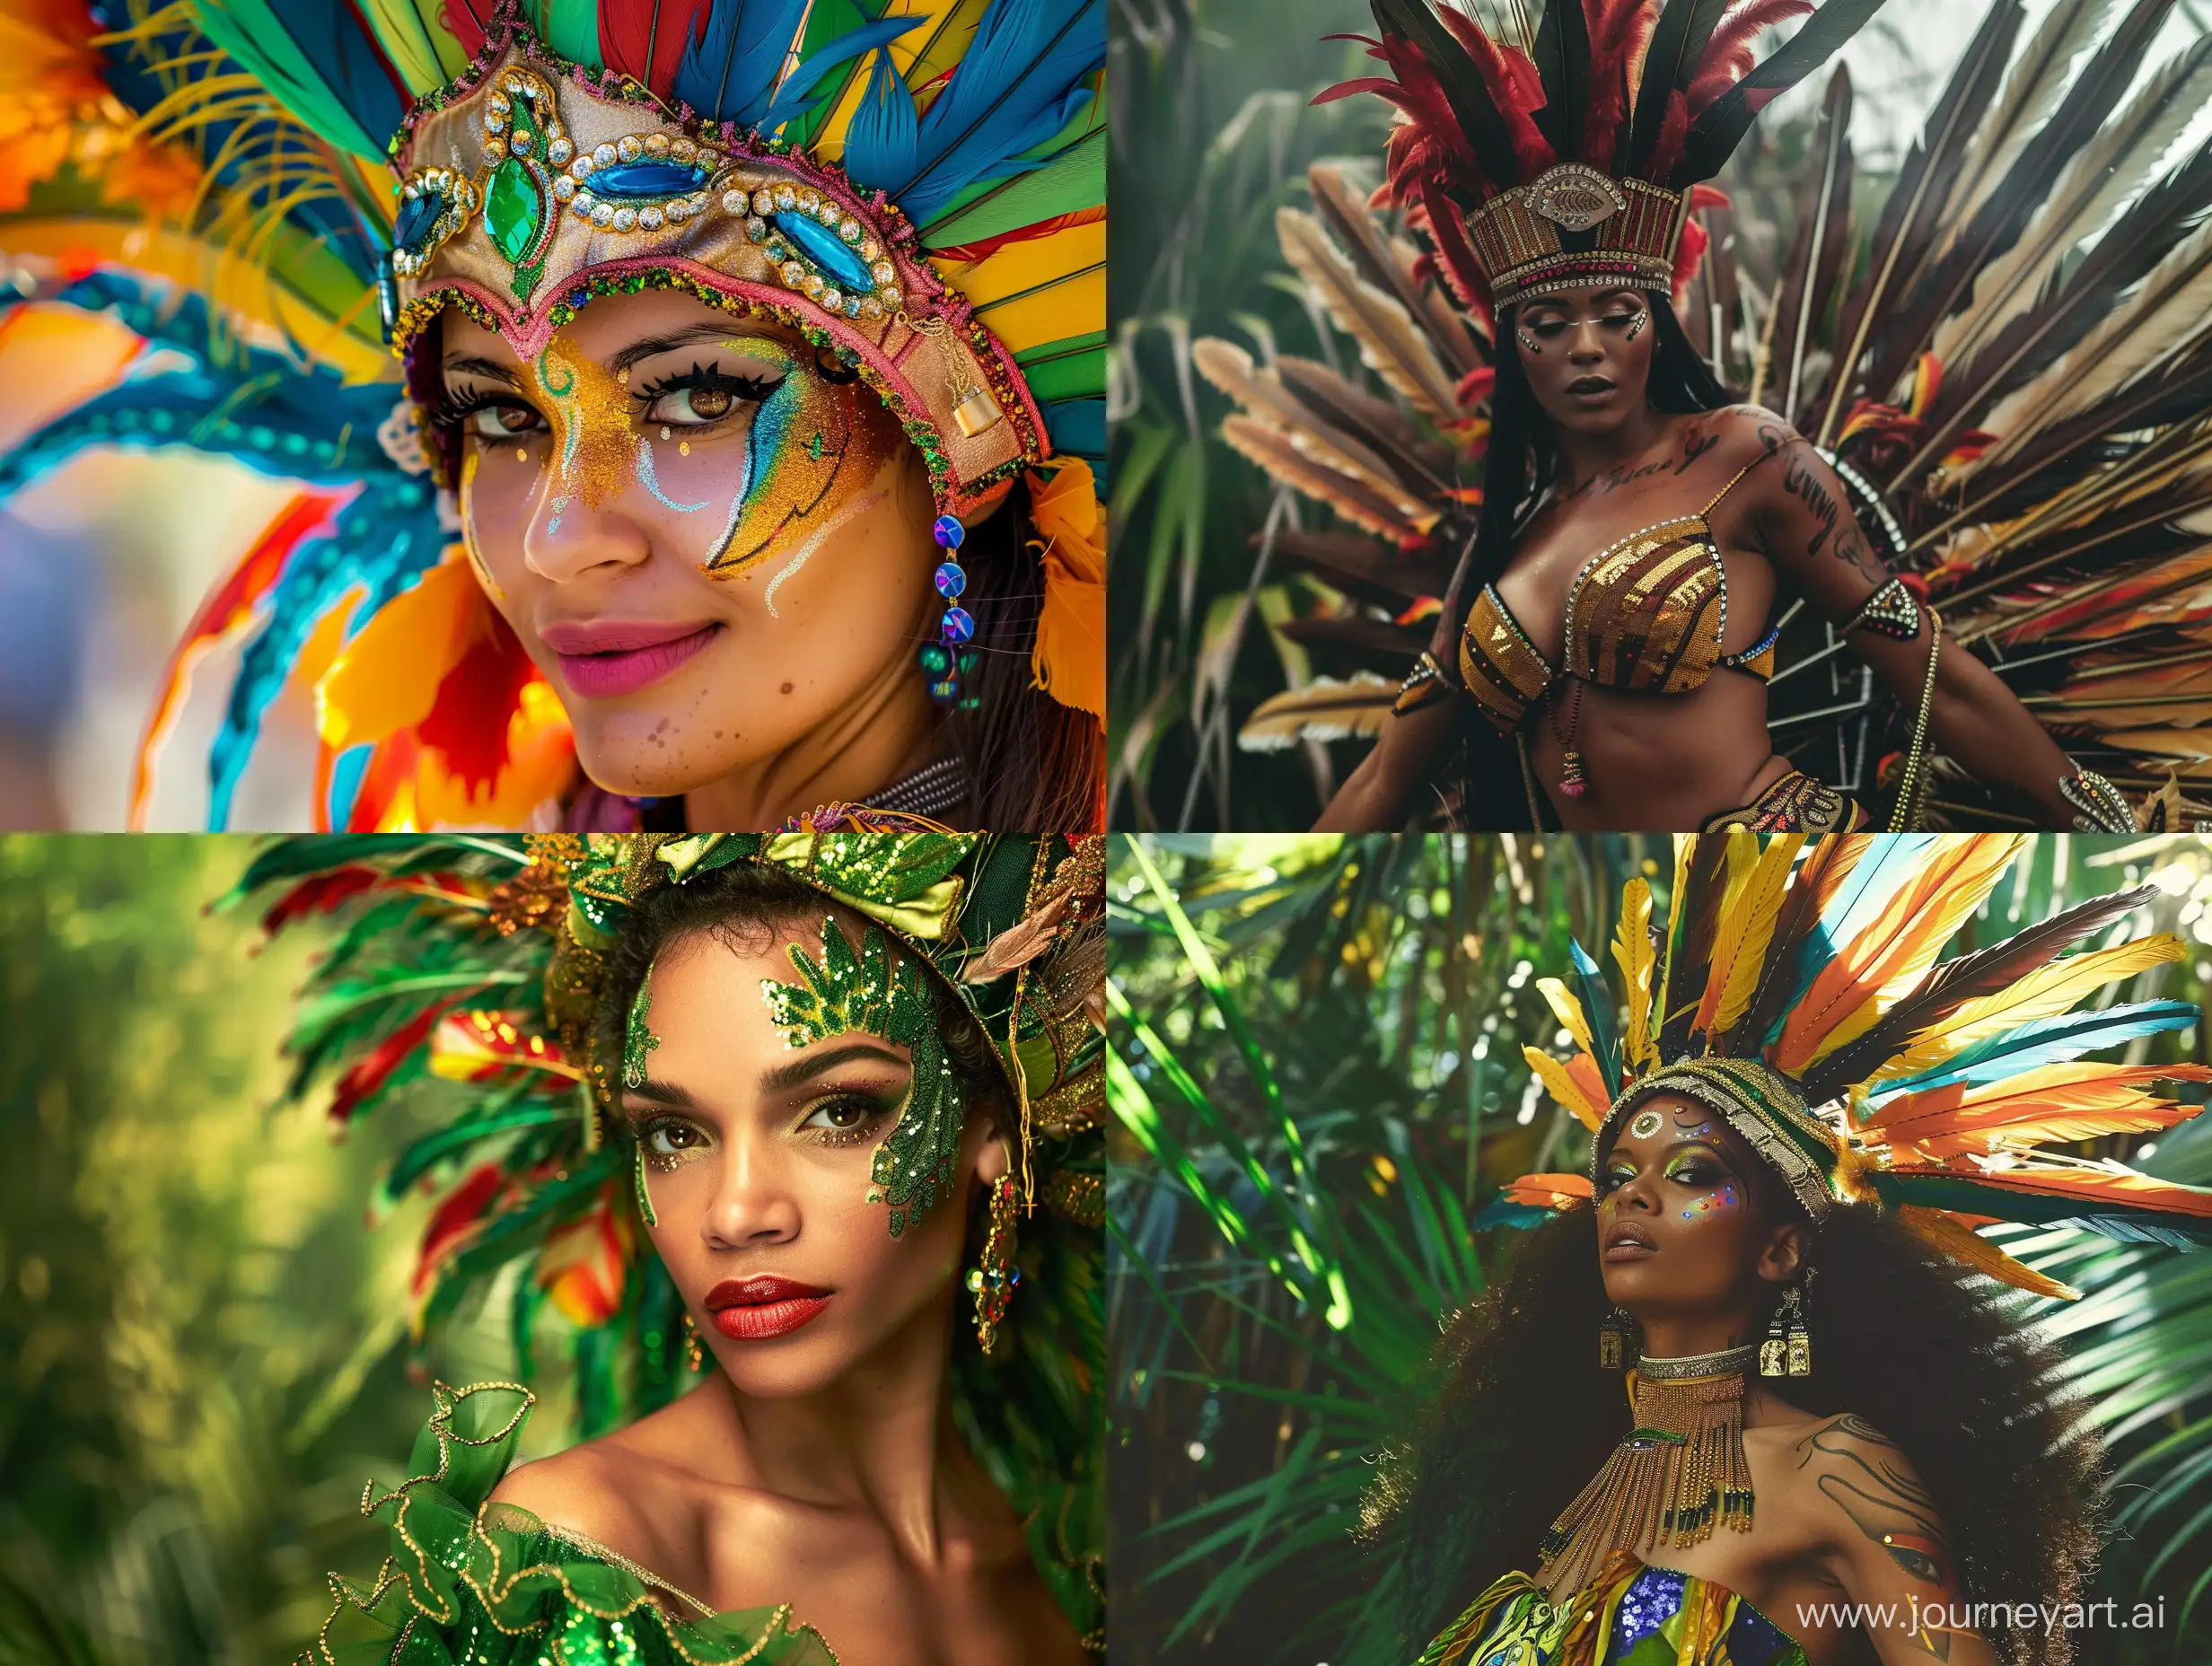 brazil, carnival, glamour, hot, nature, erotic



